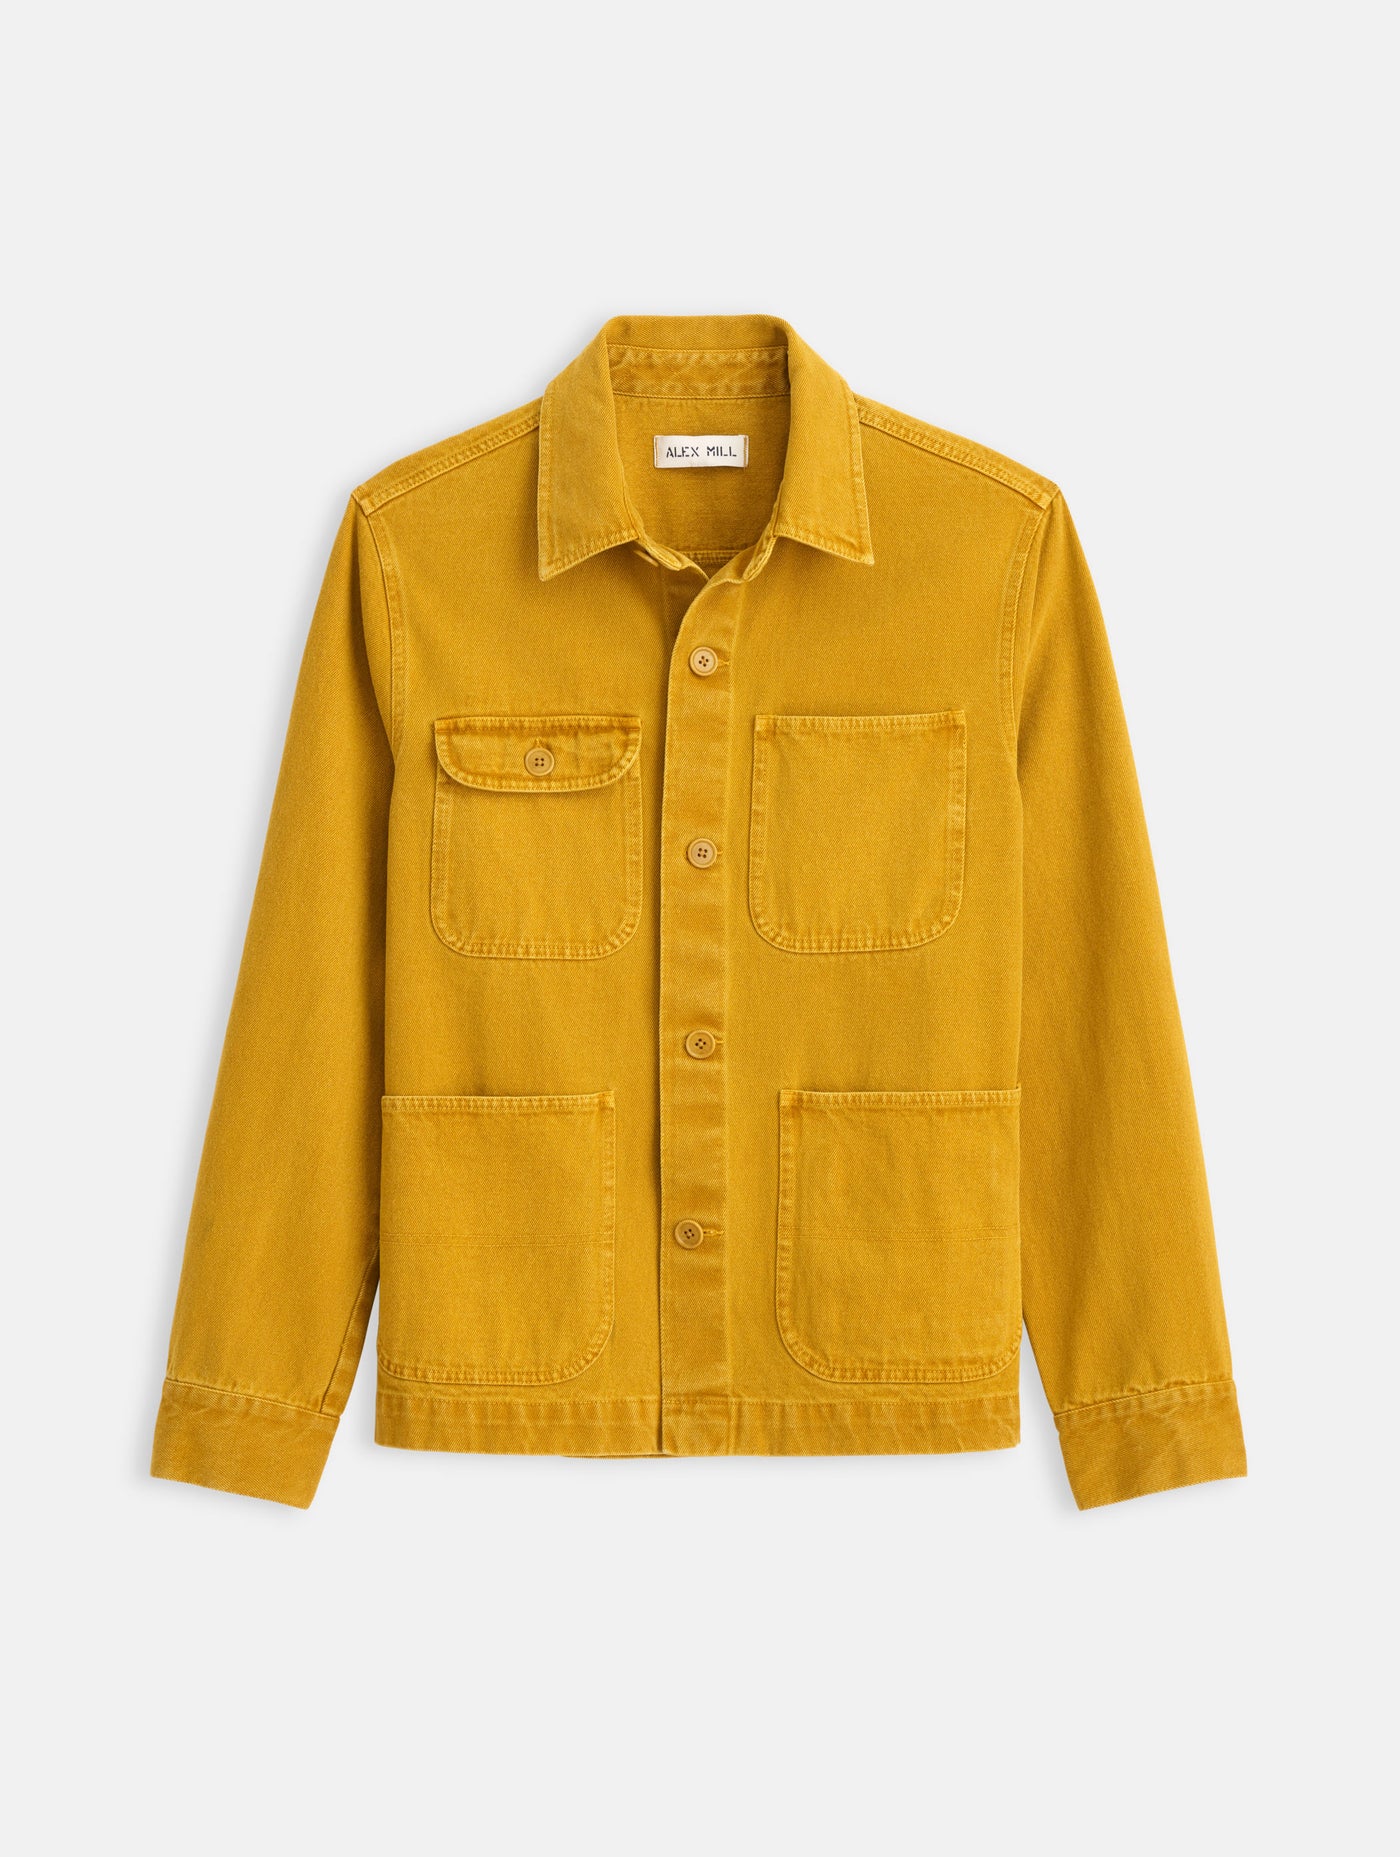 Alex Mill | Garment Dyed Work Jacket in Recycled Denim Yellow Ochre / LG